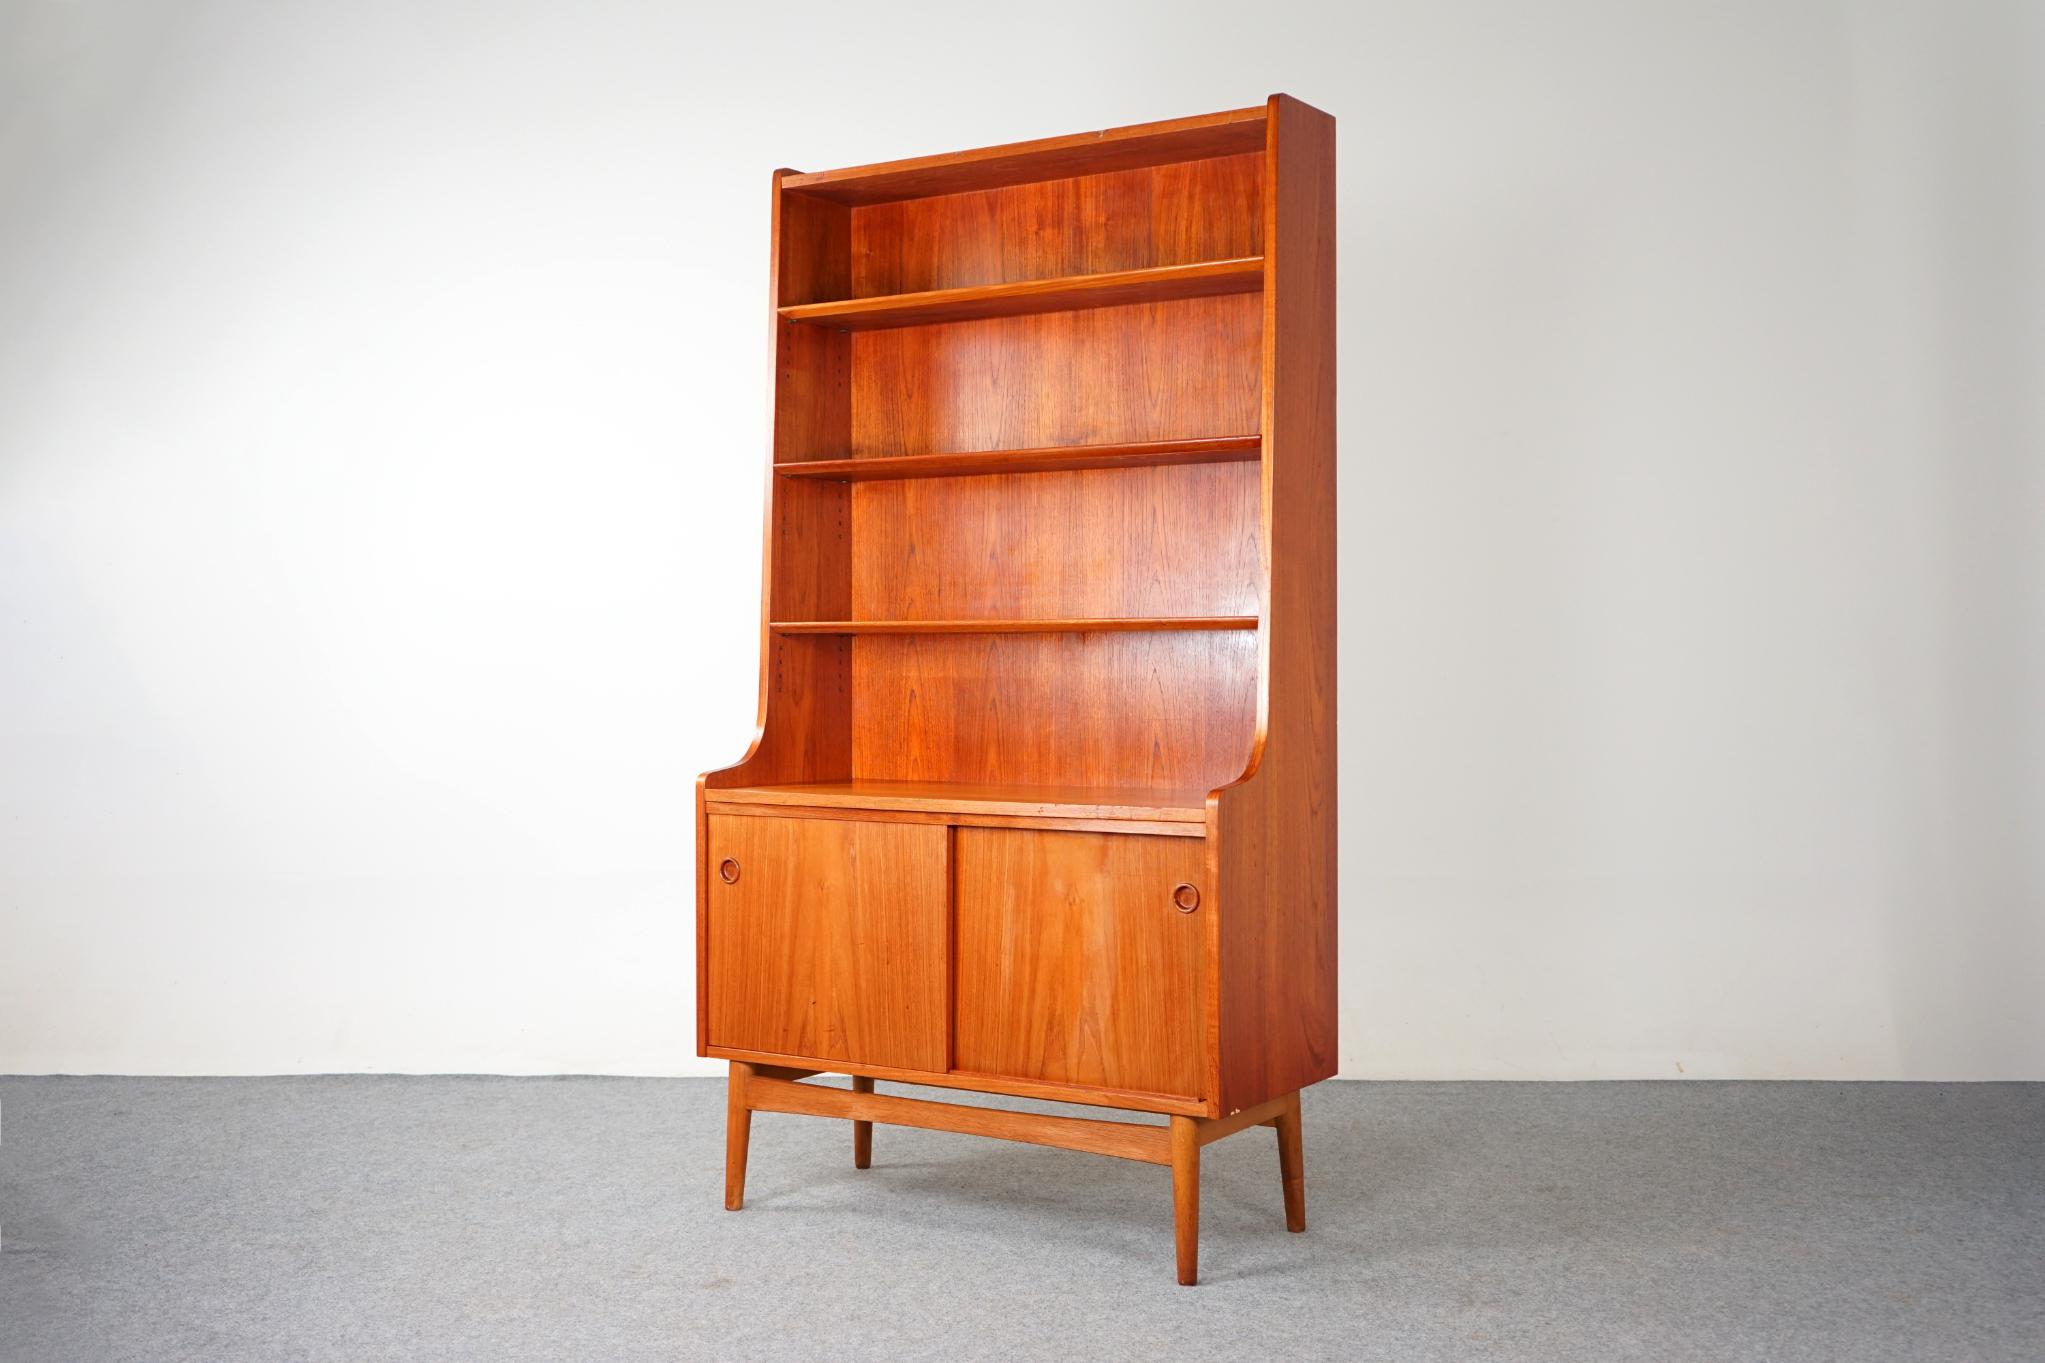 Veneer Danish Mid-Century Modern Teak Bookcase with Cabinet